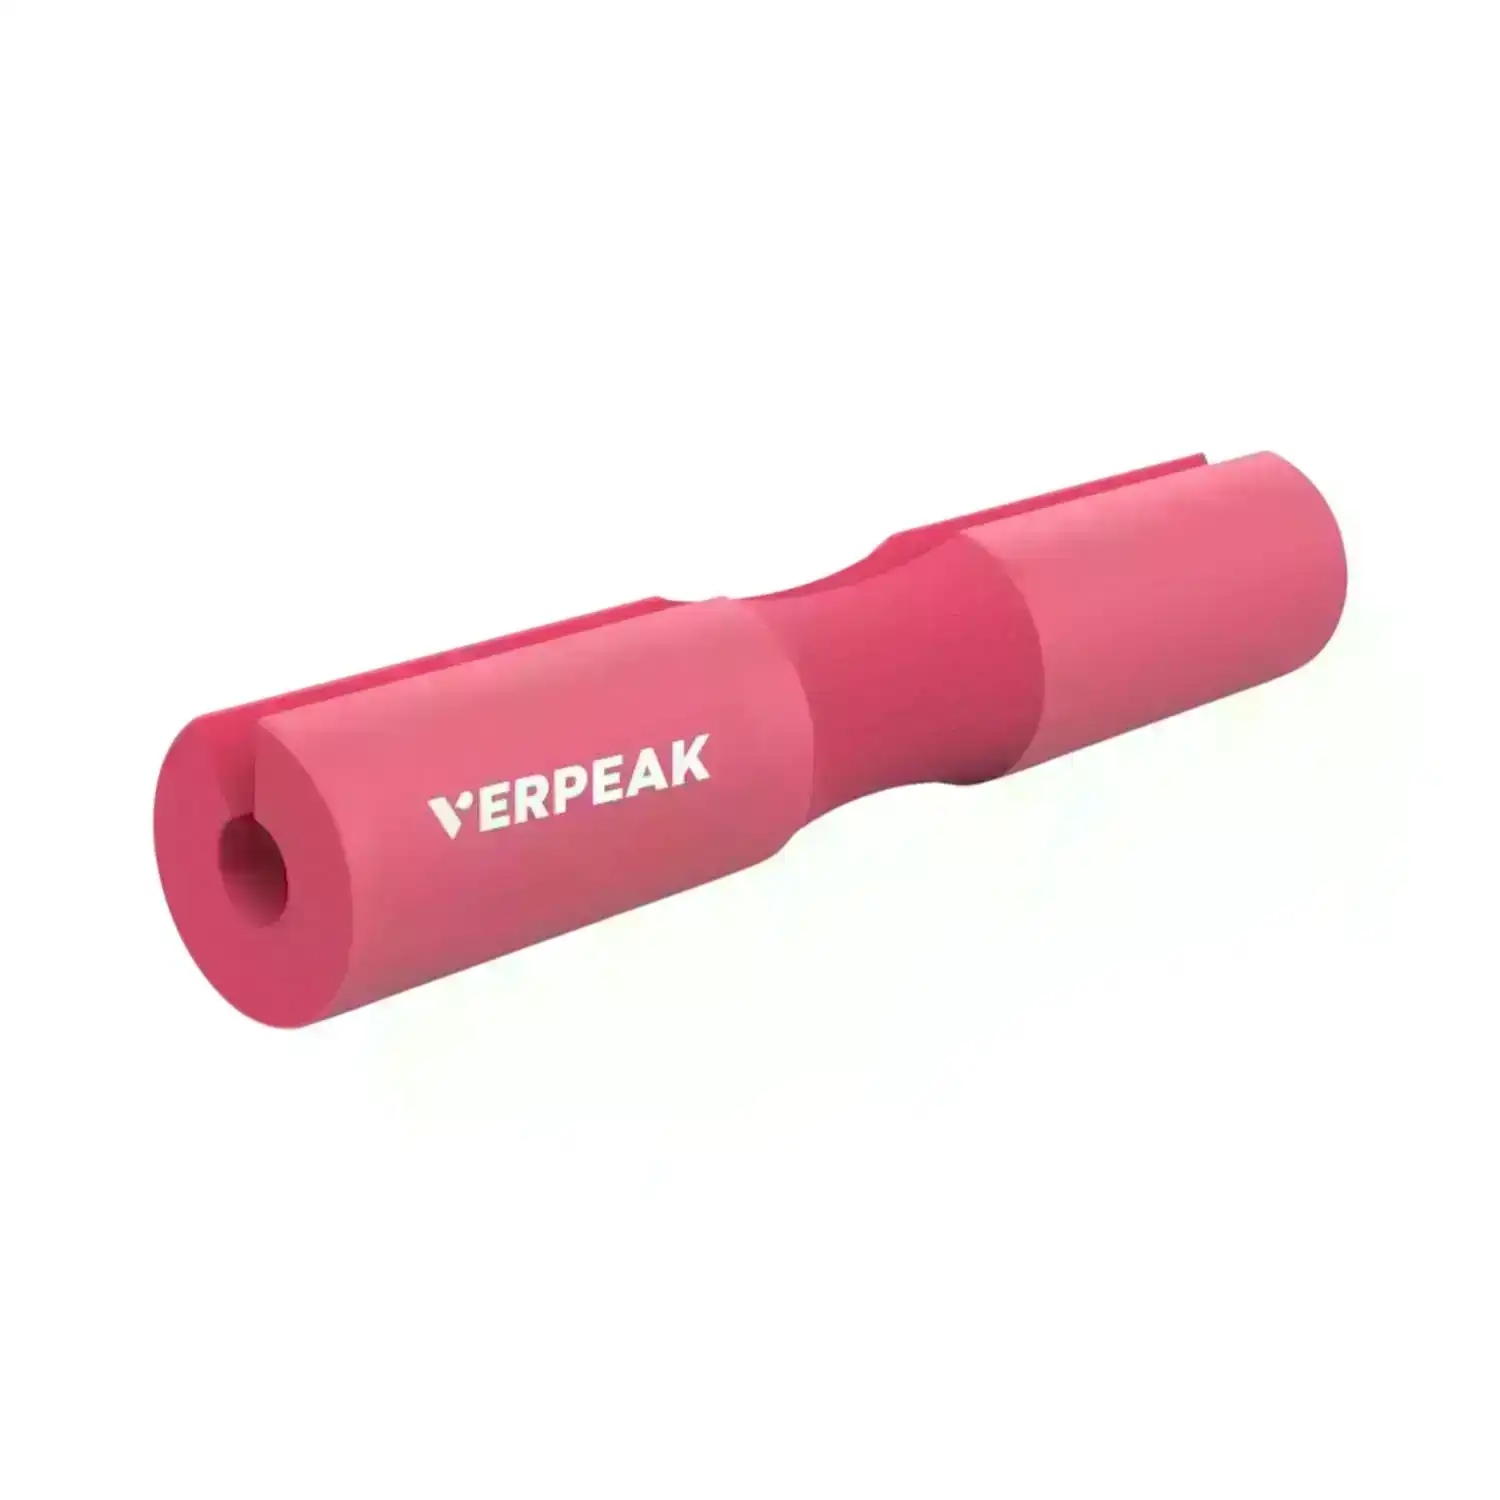 Verpeak Barbell Squat Pad Lightweight Portable Anti-Slip Material Pink